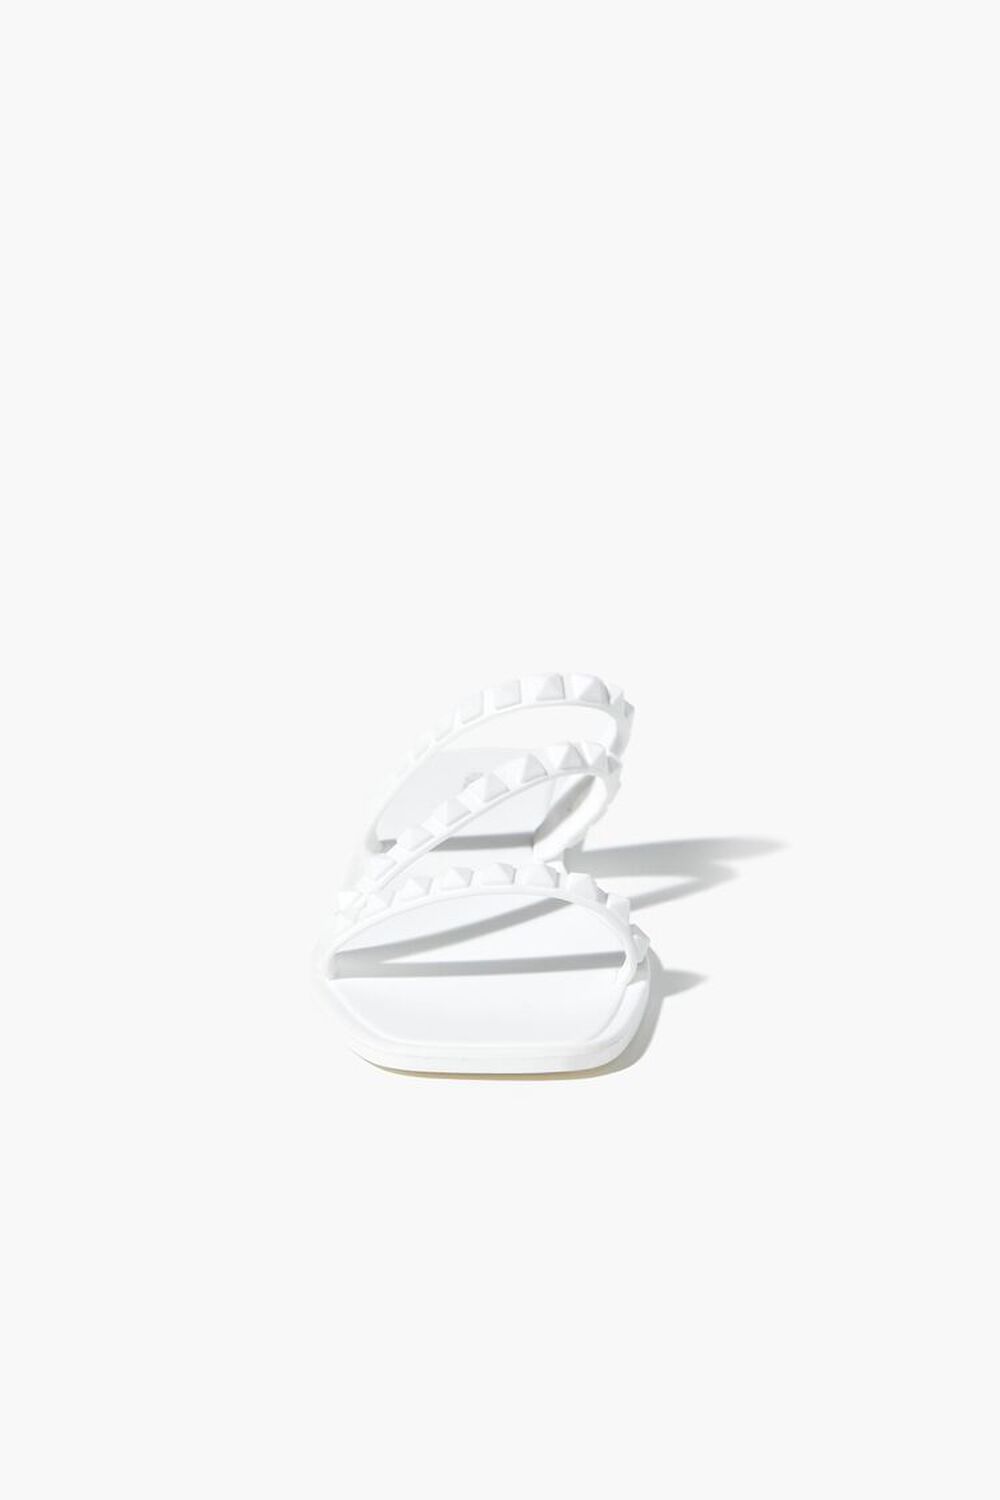 WHITE Studded Square-Toe Sandals, image 3